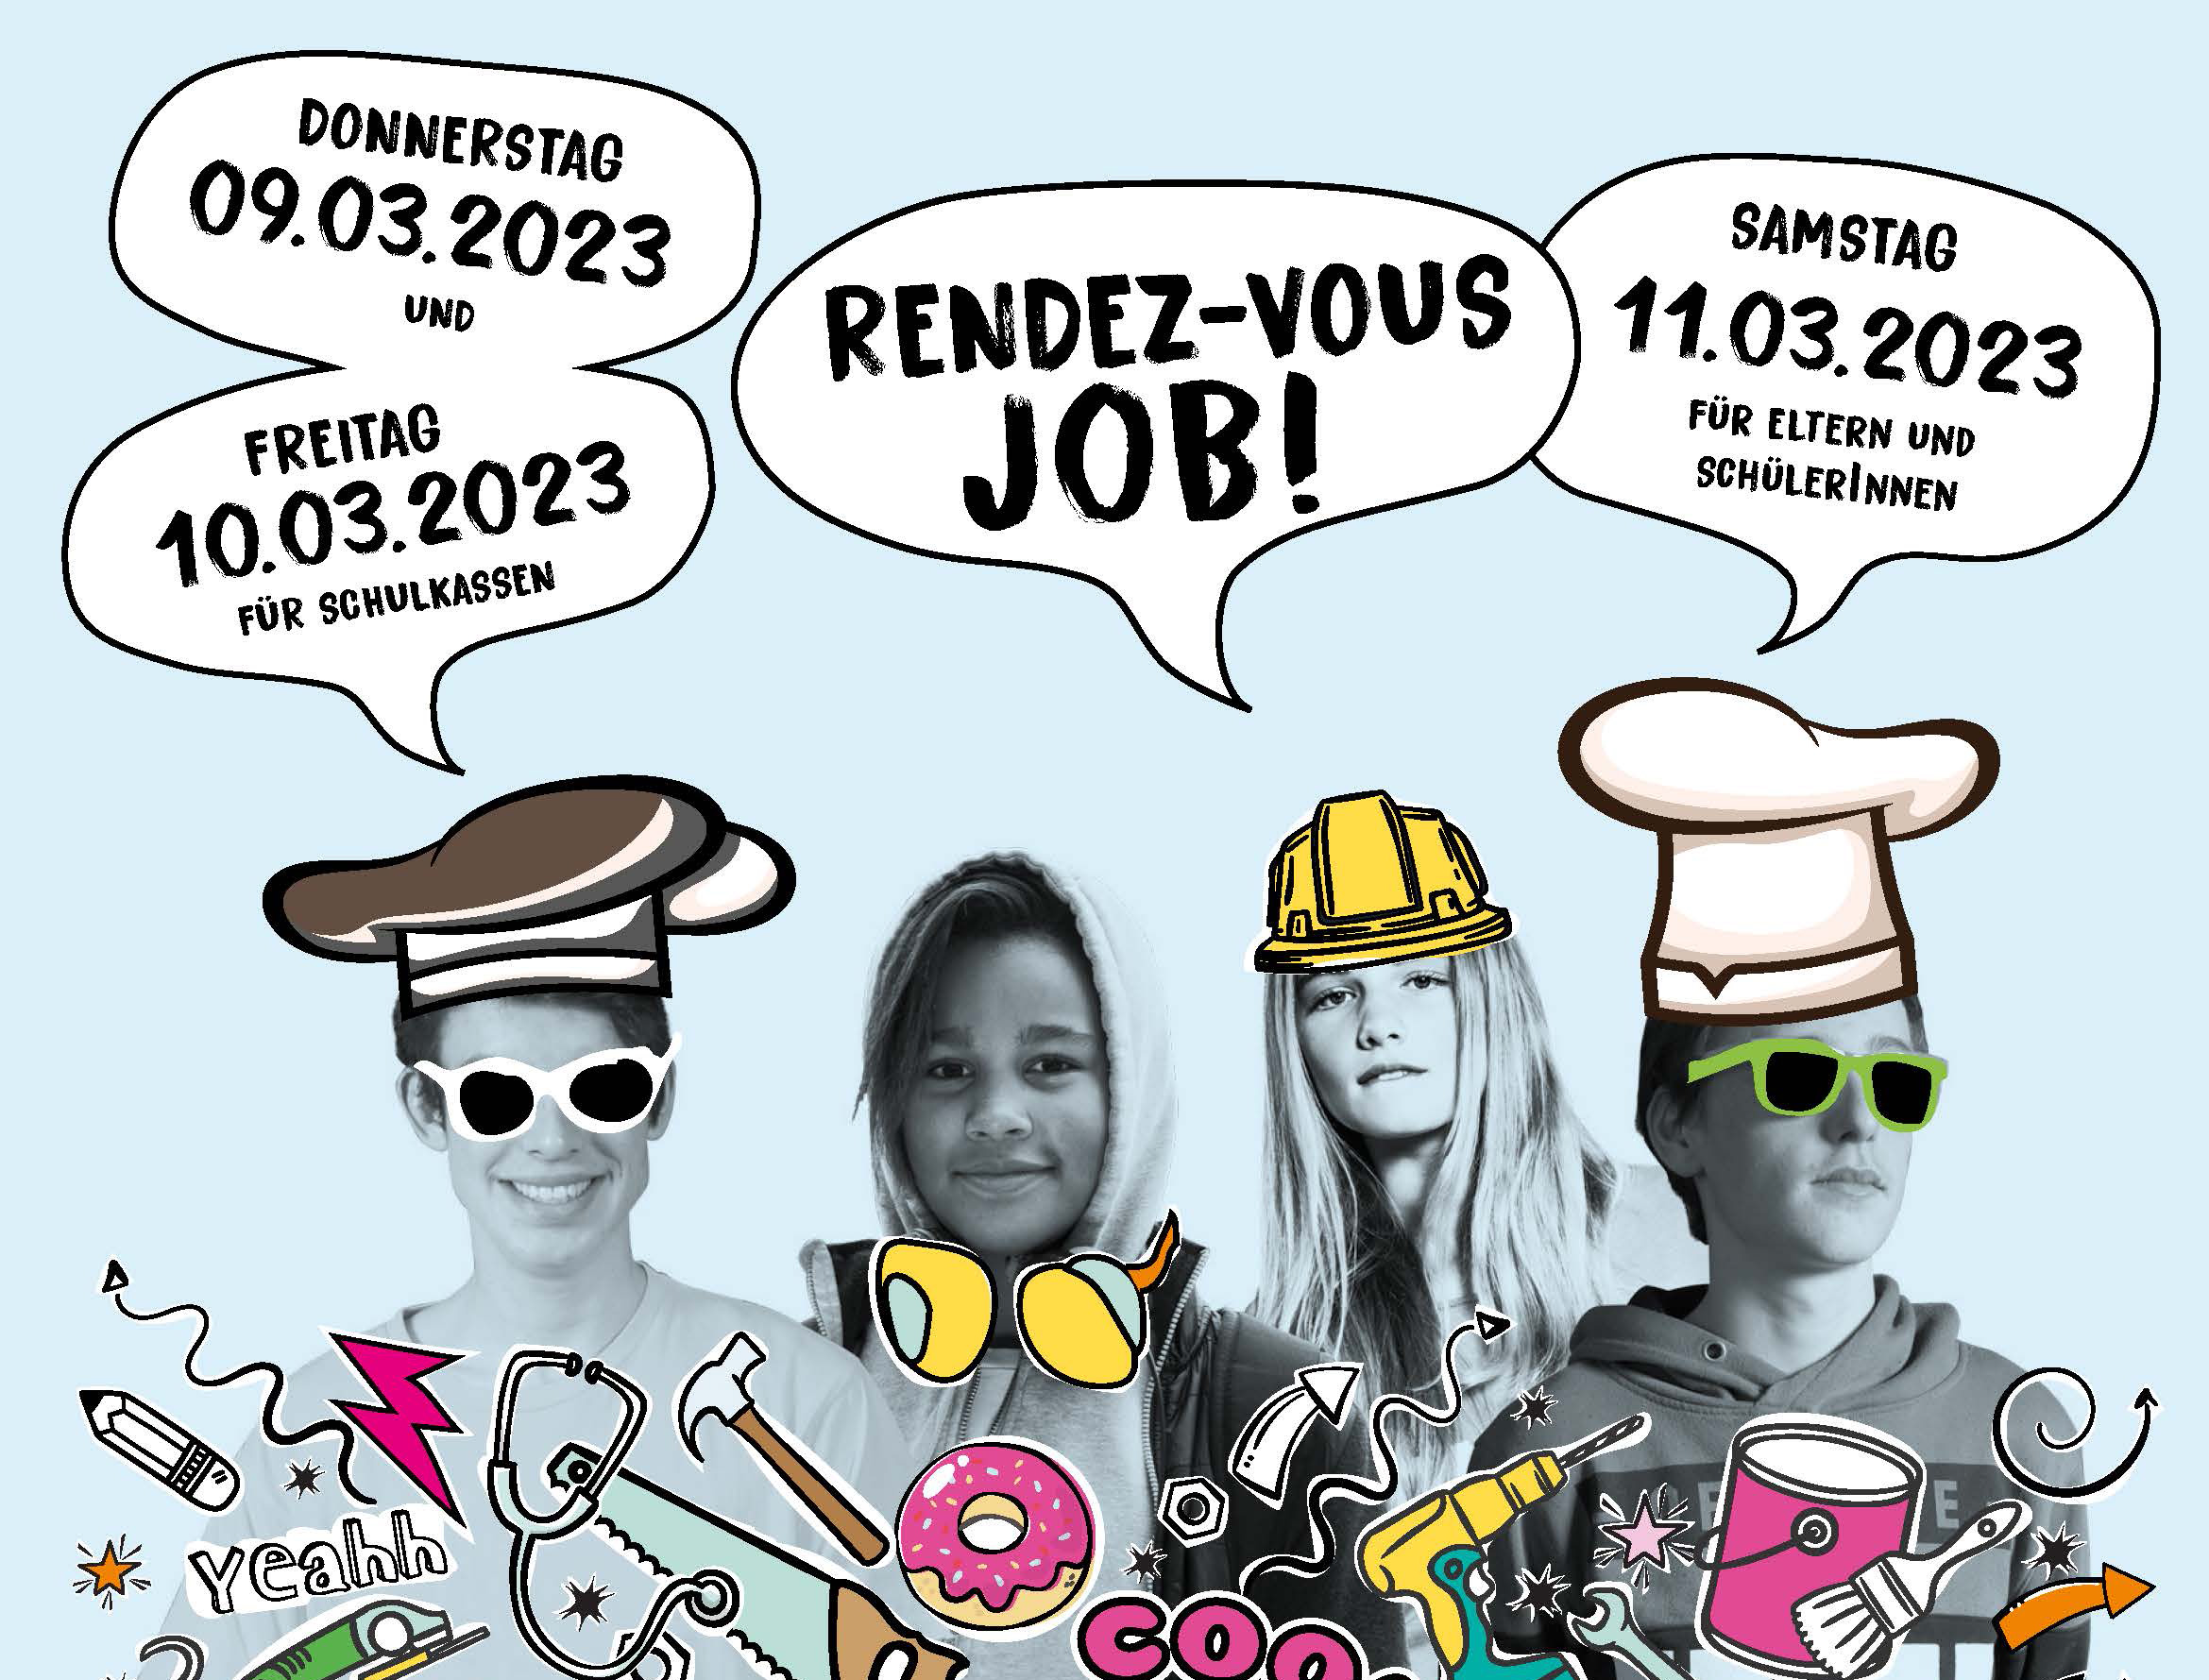 Save the Date: Rendez-vous Job 2023 vom 9. bis 11. März